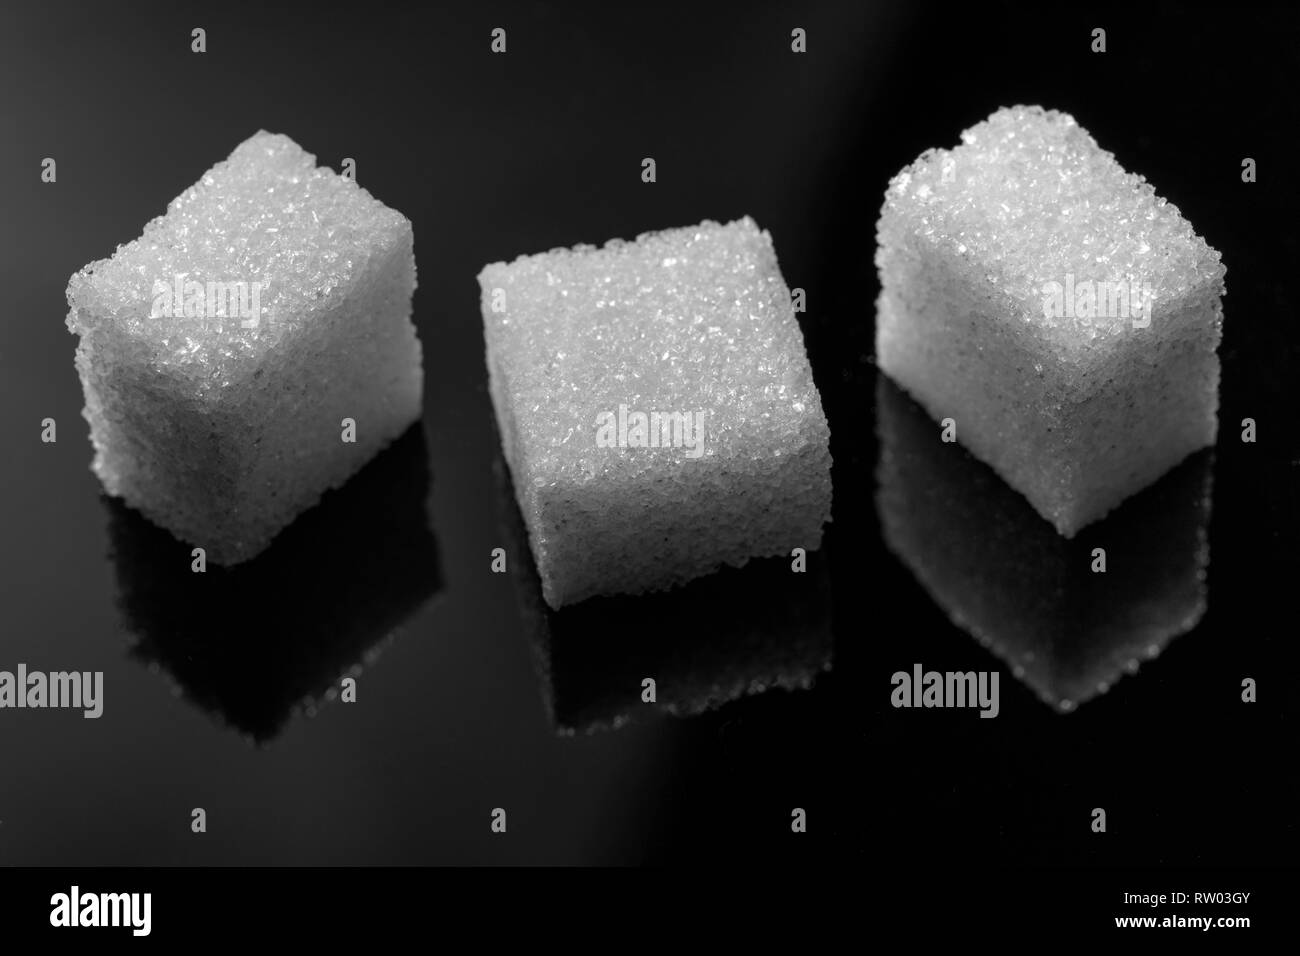 three peaces cube sugar on black background Stock Photo